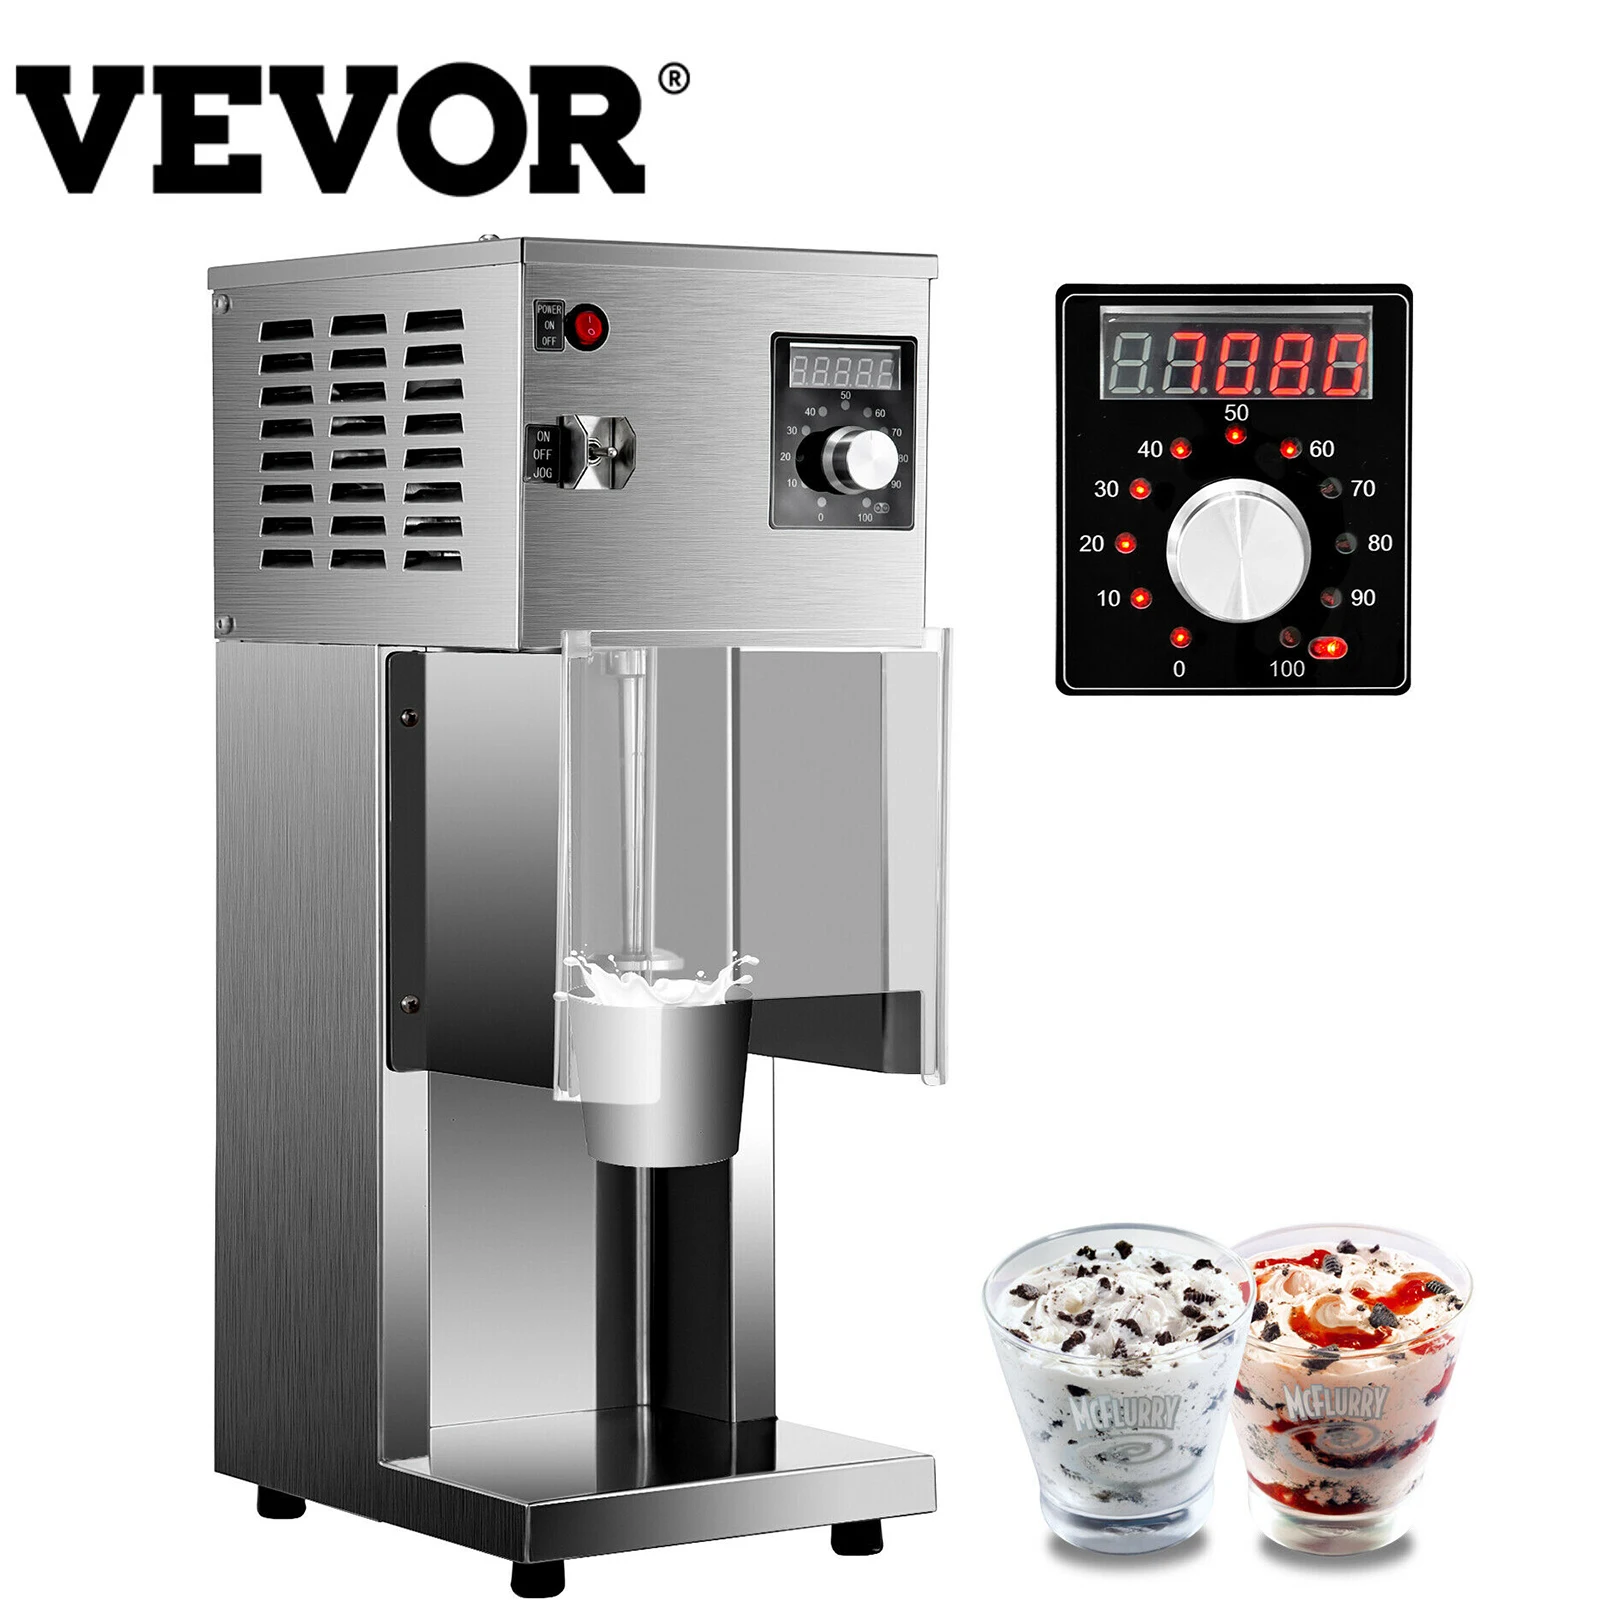 VEVOR Commercial Electric Auto Ice Cream Maker Slush Machine Shaker Blender Mixer with 10-Speed Levels for Yogurt Milk